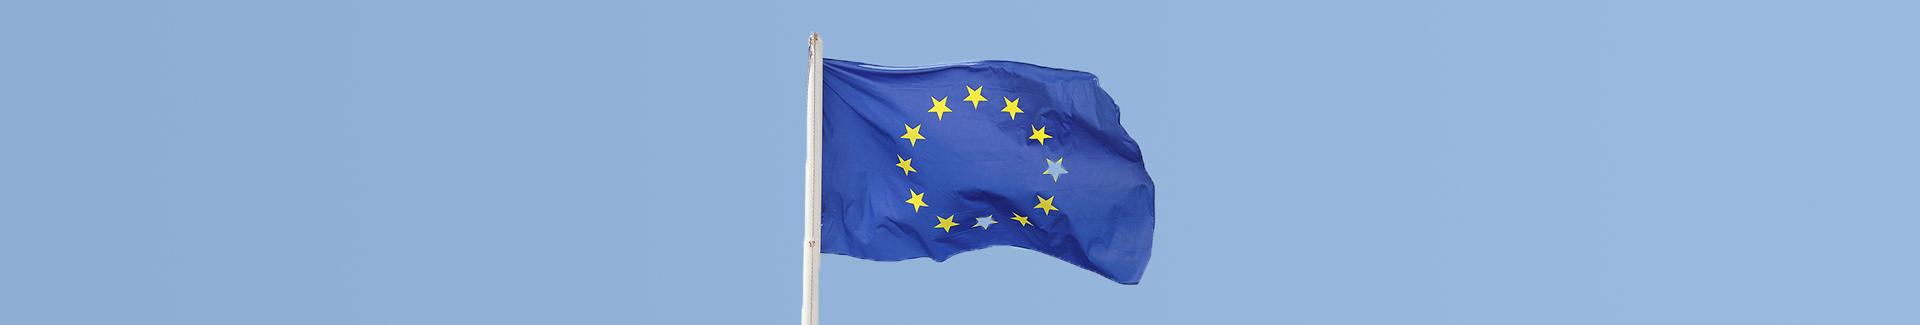 Affaires Européennes - banner